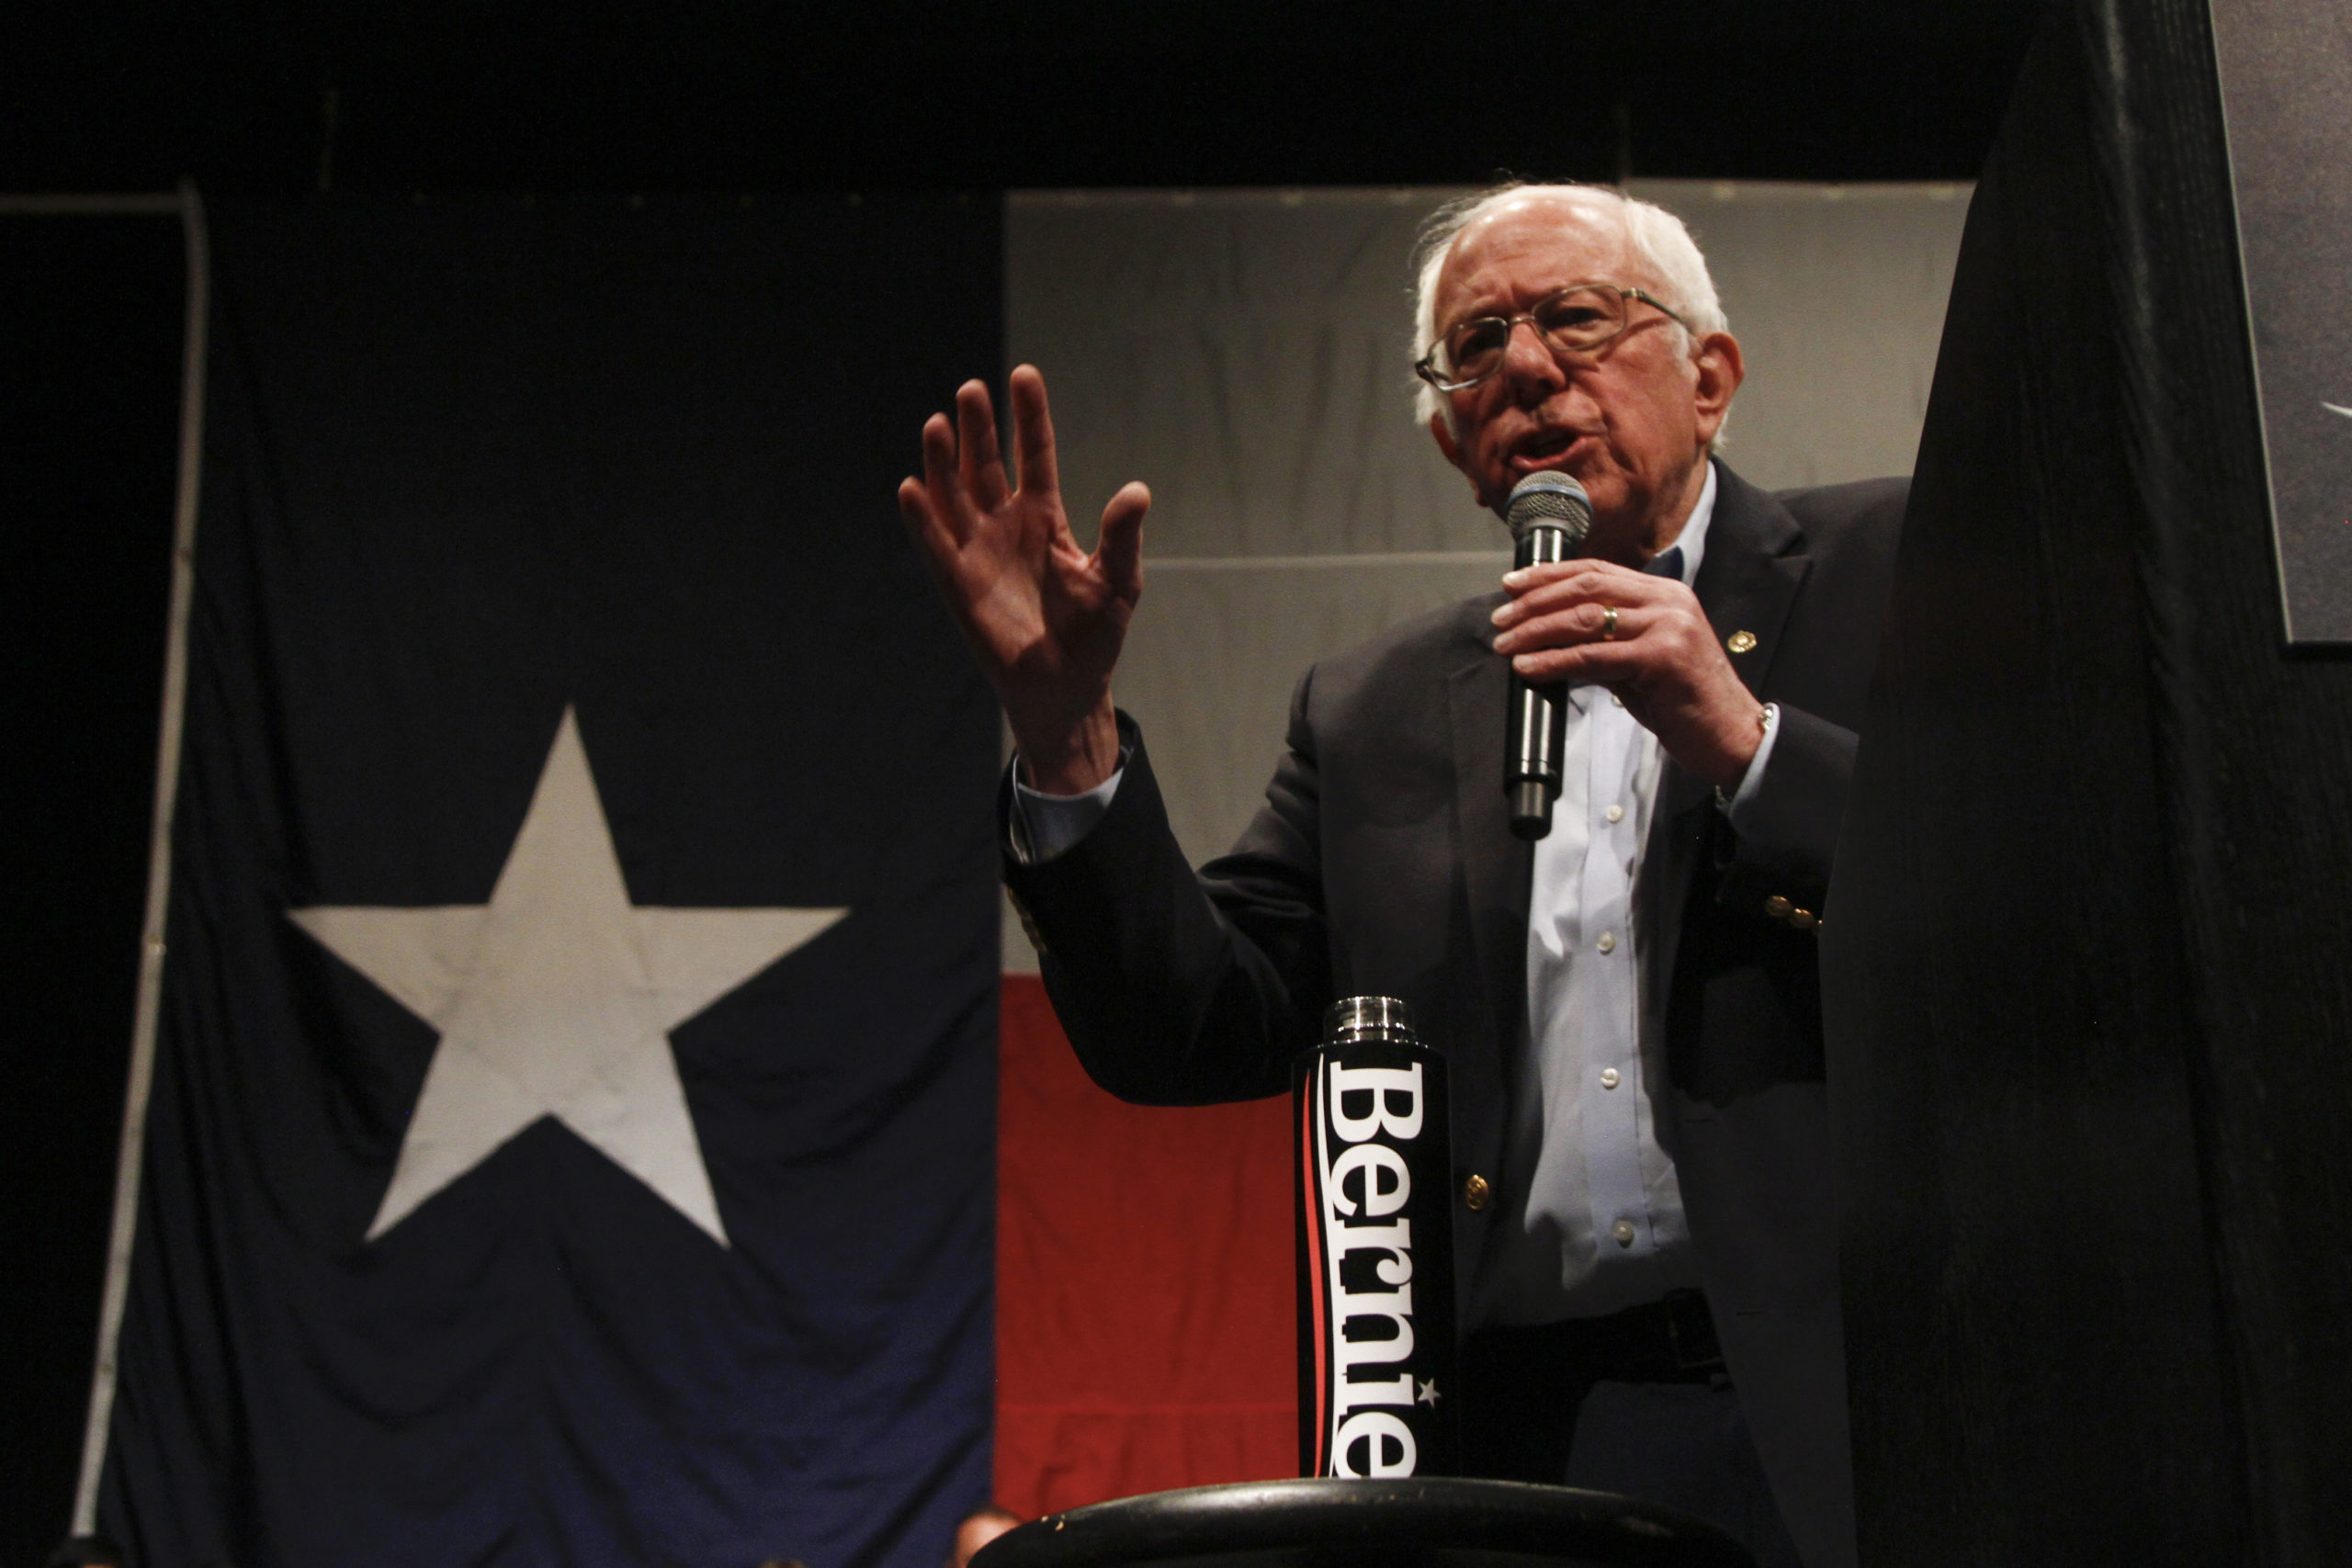 Bernie Sanders speaking at a campaign rally in El Paso.